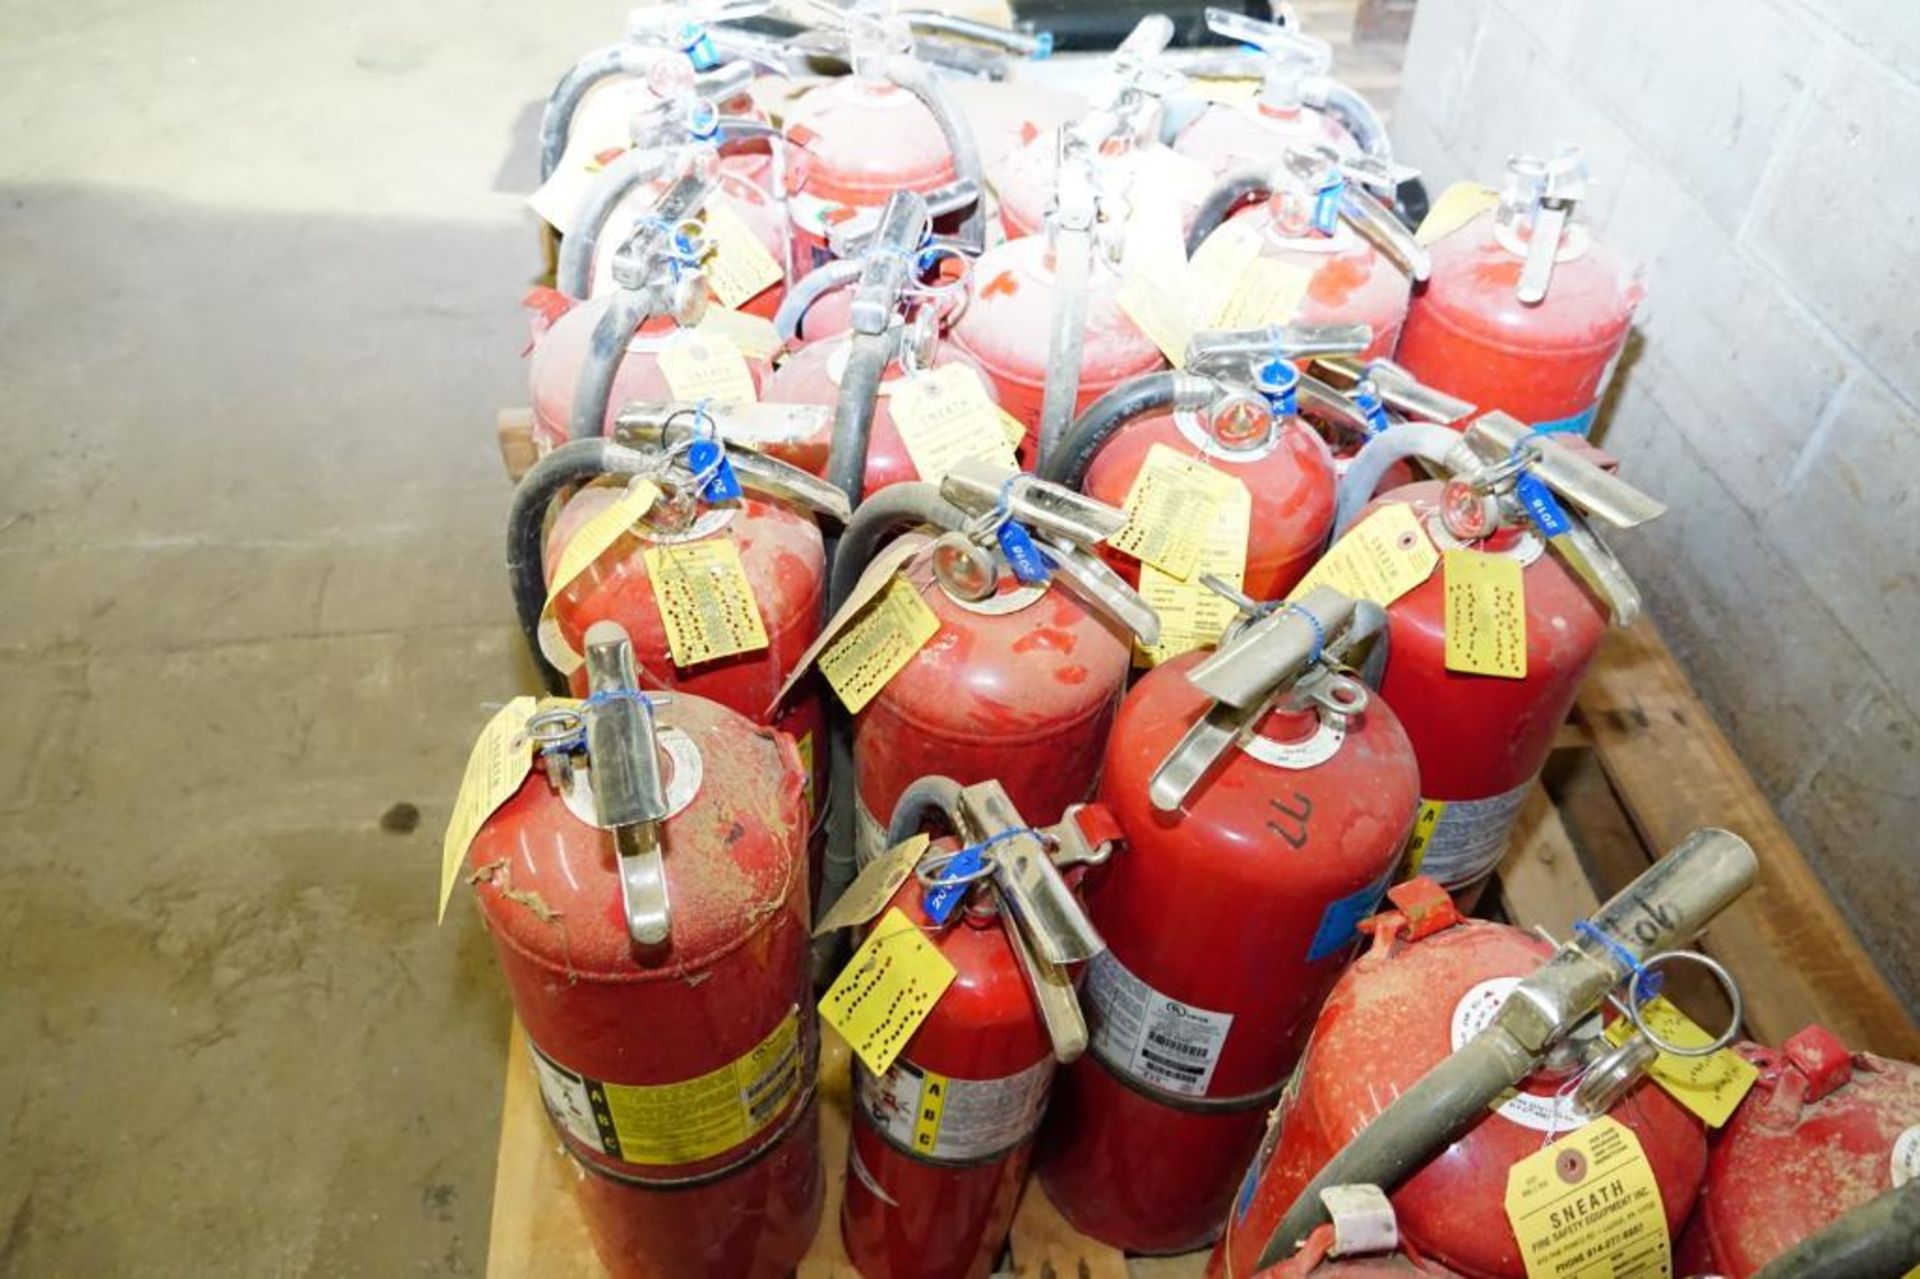 Skid of ABC Fire Extinguishers - Image 2 of 2